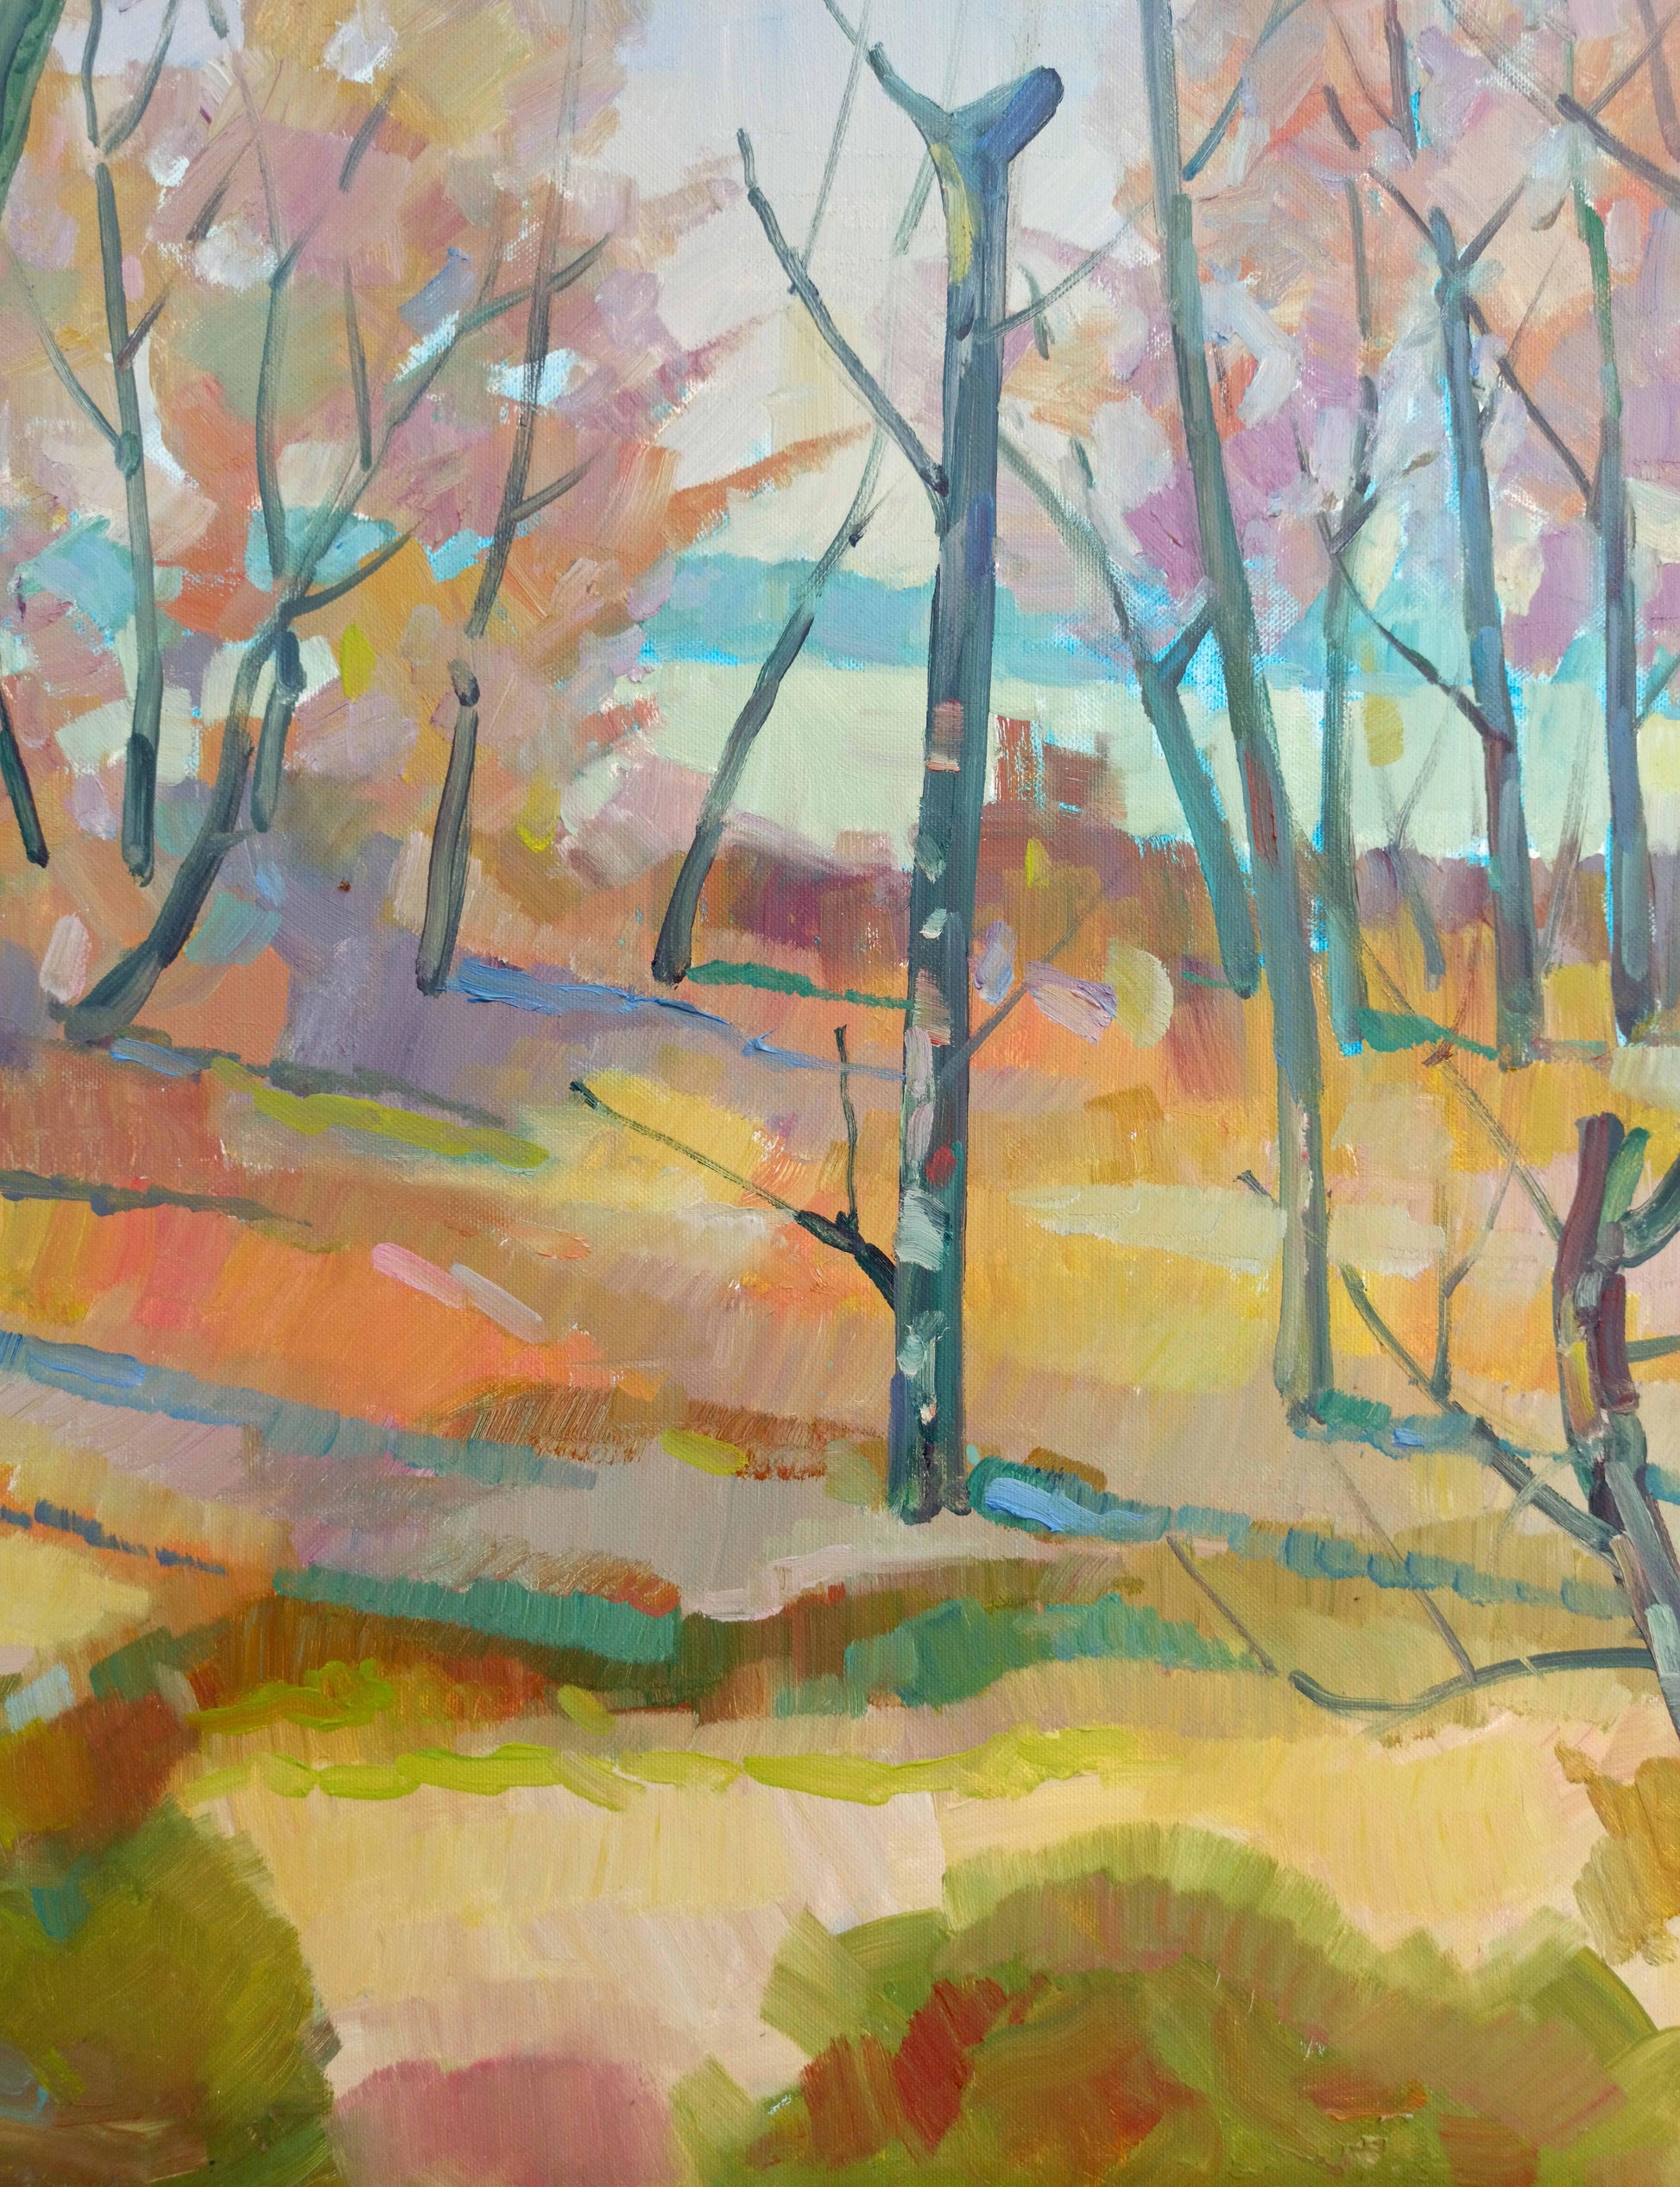 The essence of spring is depicted in Peter Dobrev's oil landscape